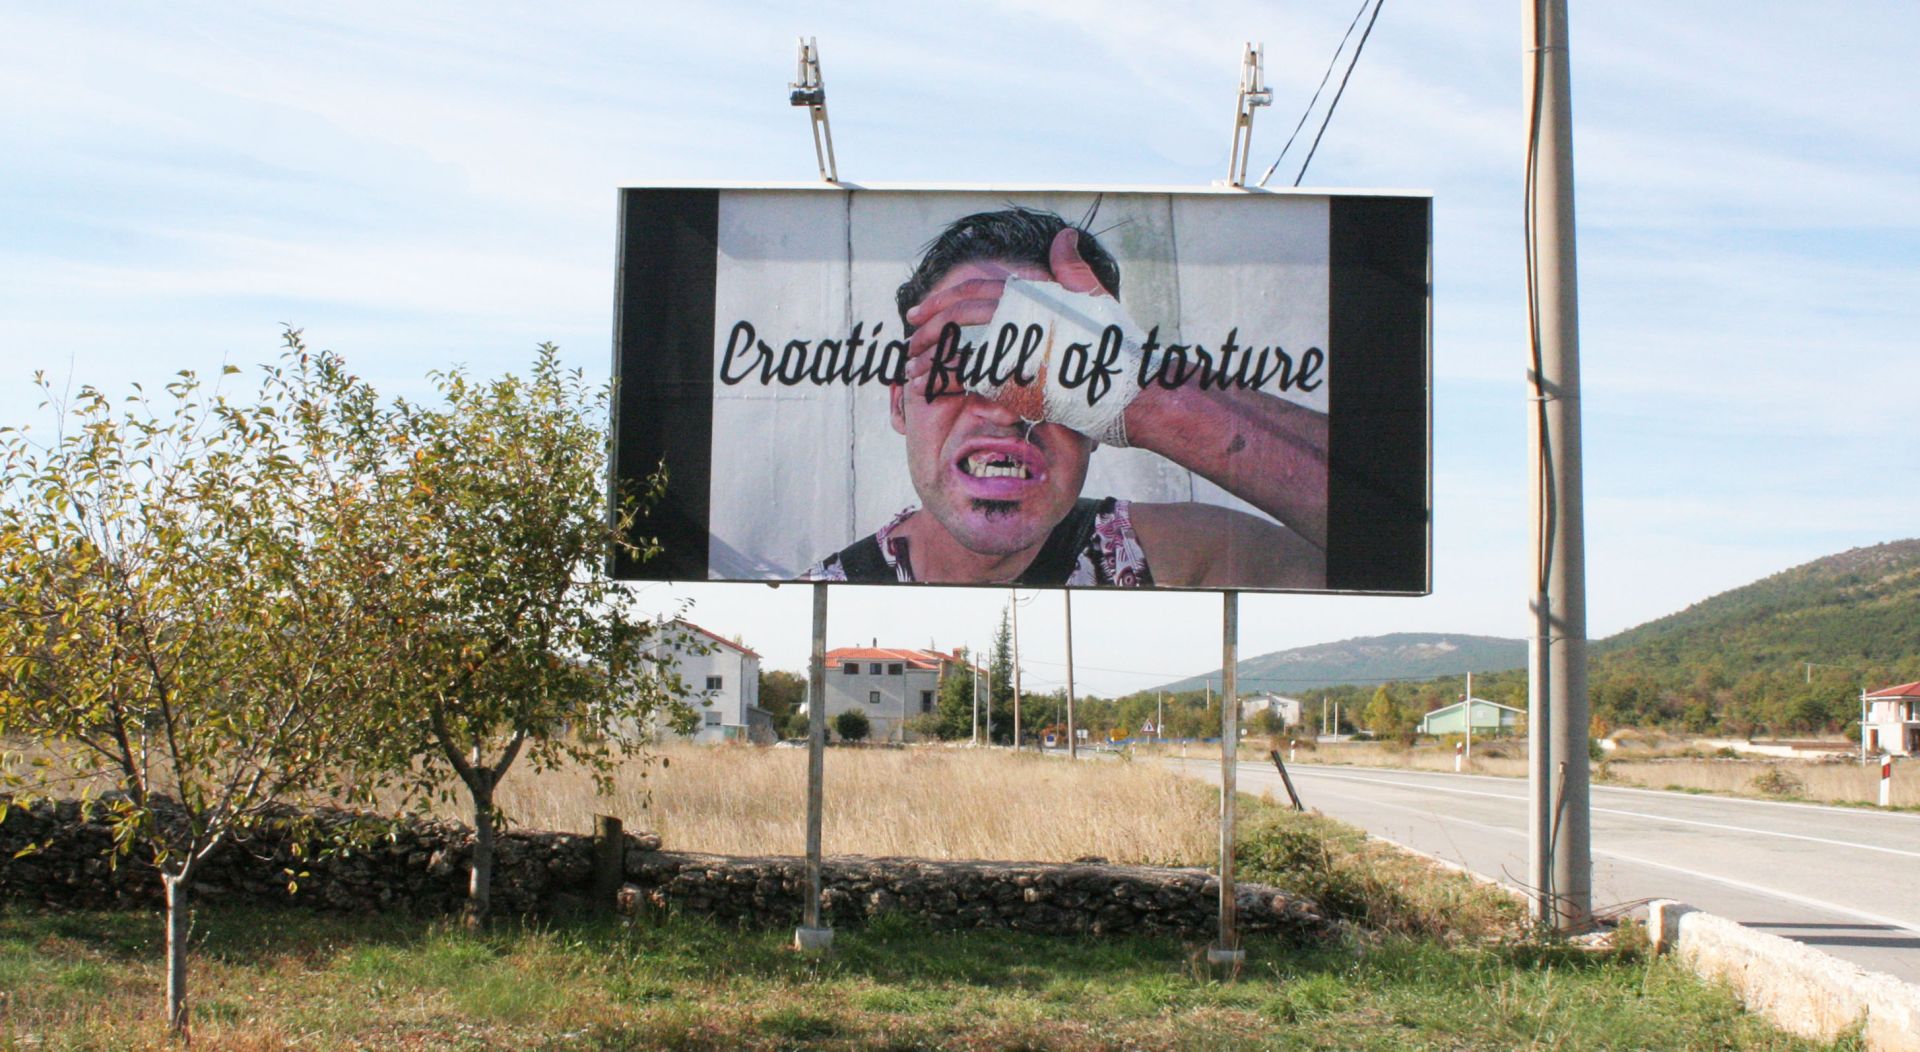 Cista Provo, Croatia full of torture